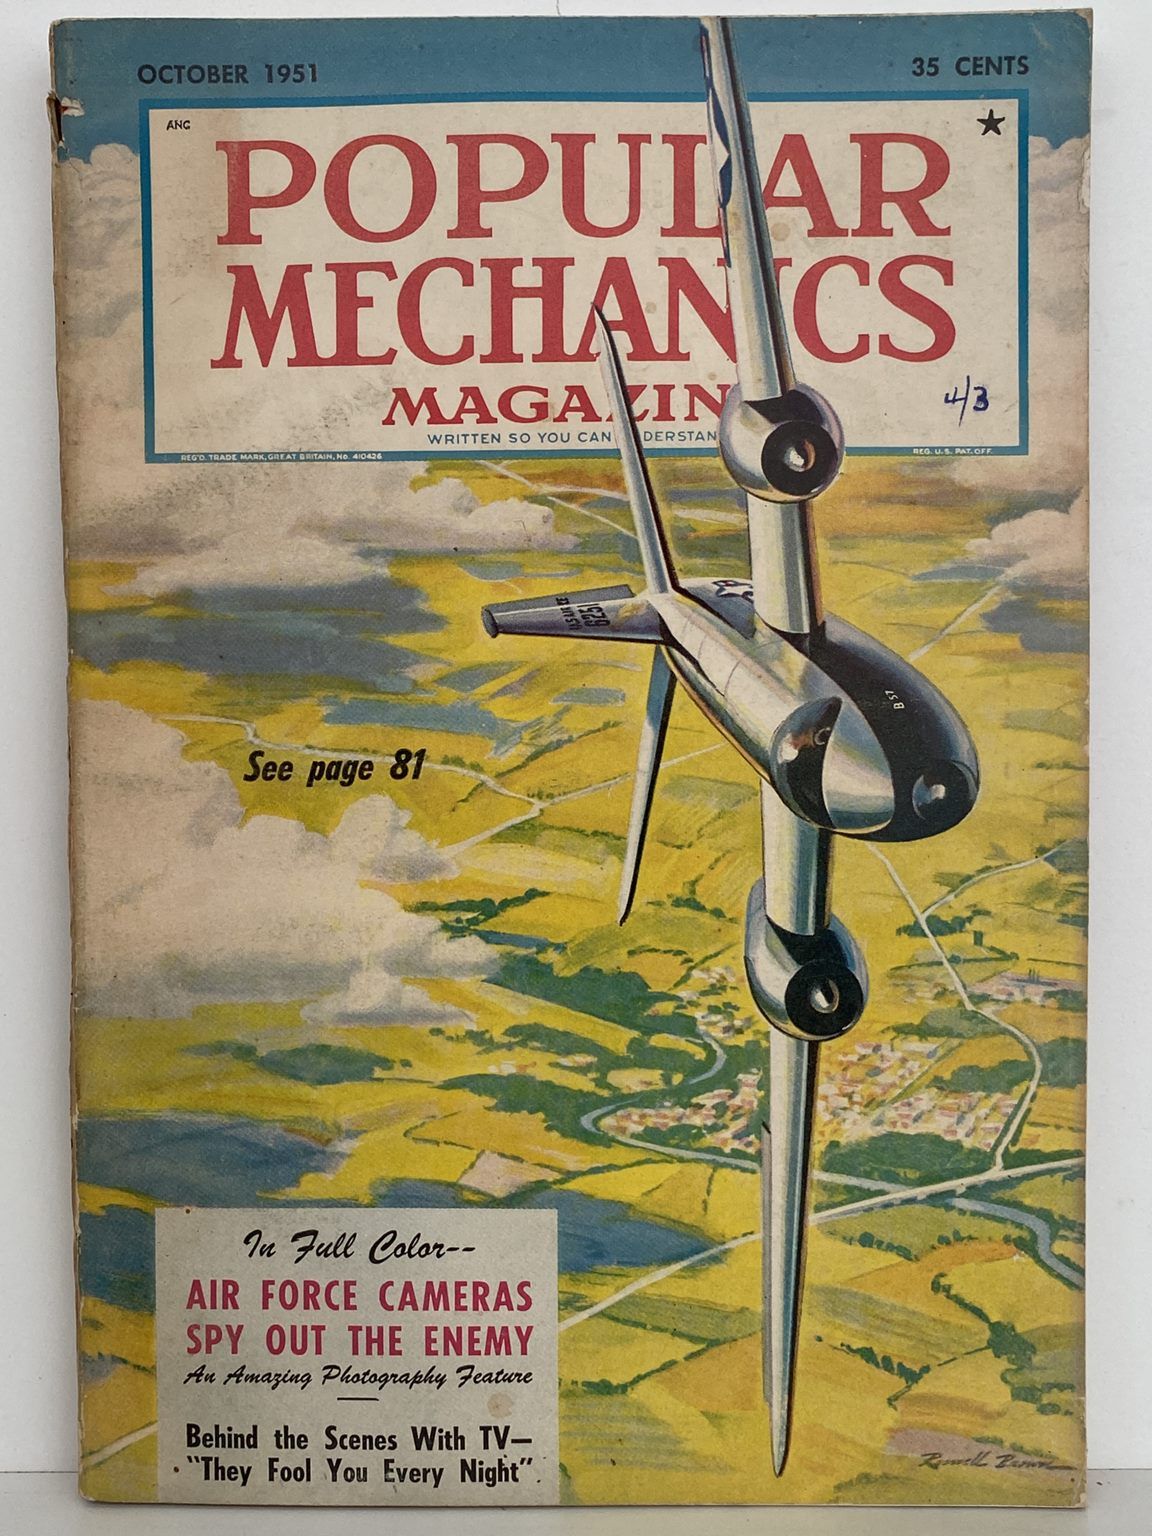 VINTAGE MAGAZINE: Popular Mechanics - Vol. 96, No. 4 - October 1951